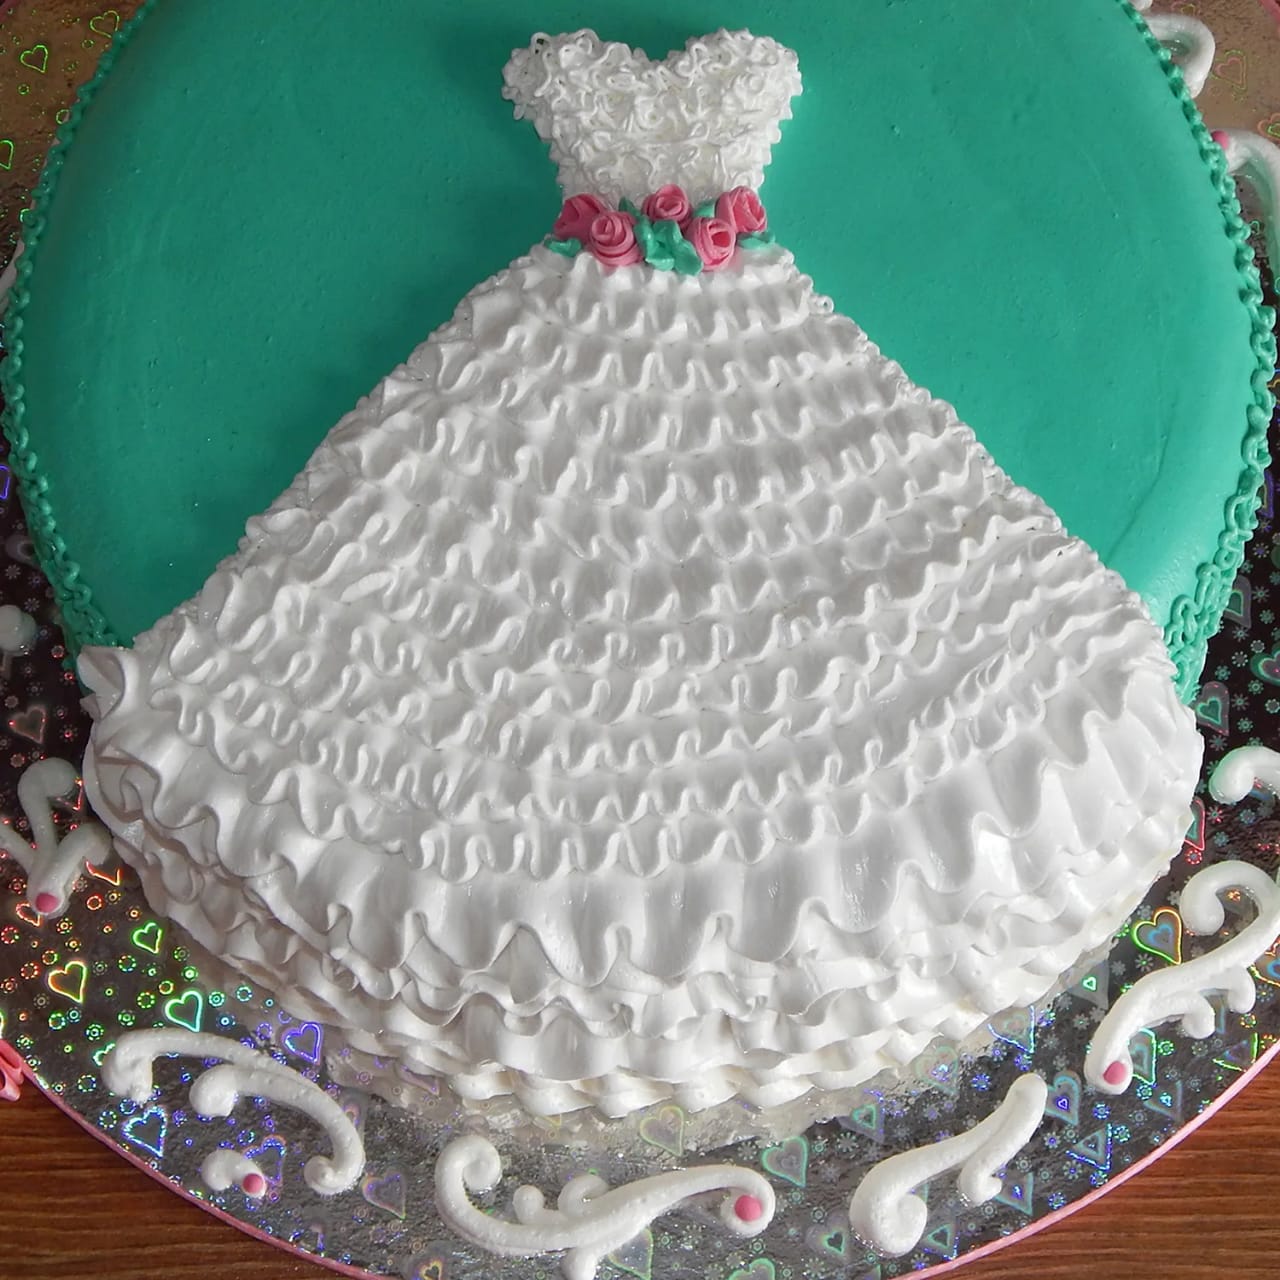 6” Vanilla and Chocolate Princess cake – Yaa's Baked Goods Galore